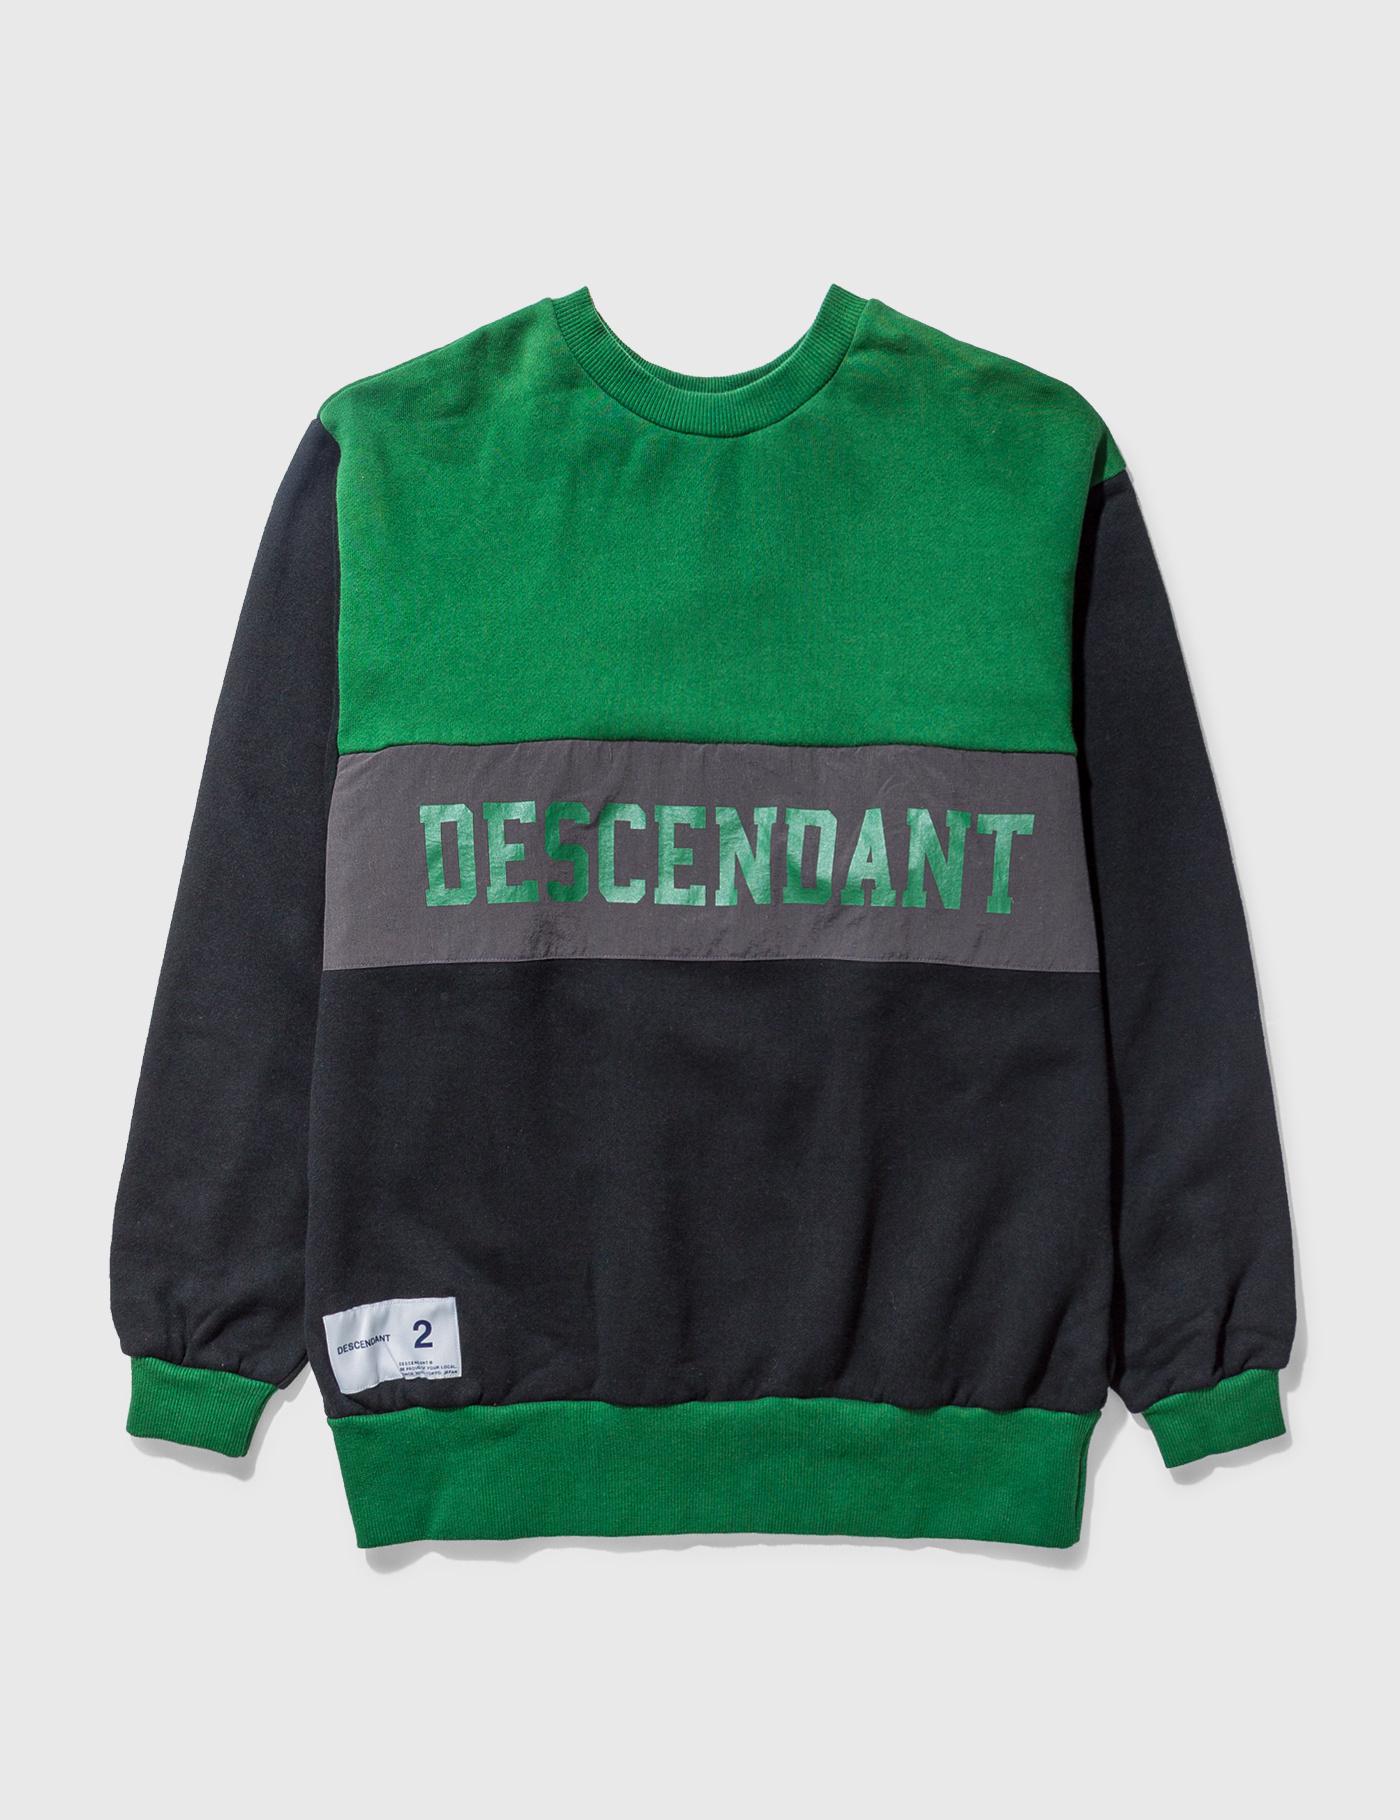 DESCENDANT Black and Green Sweatshirt by DESCENDANT